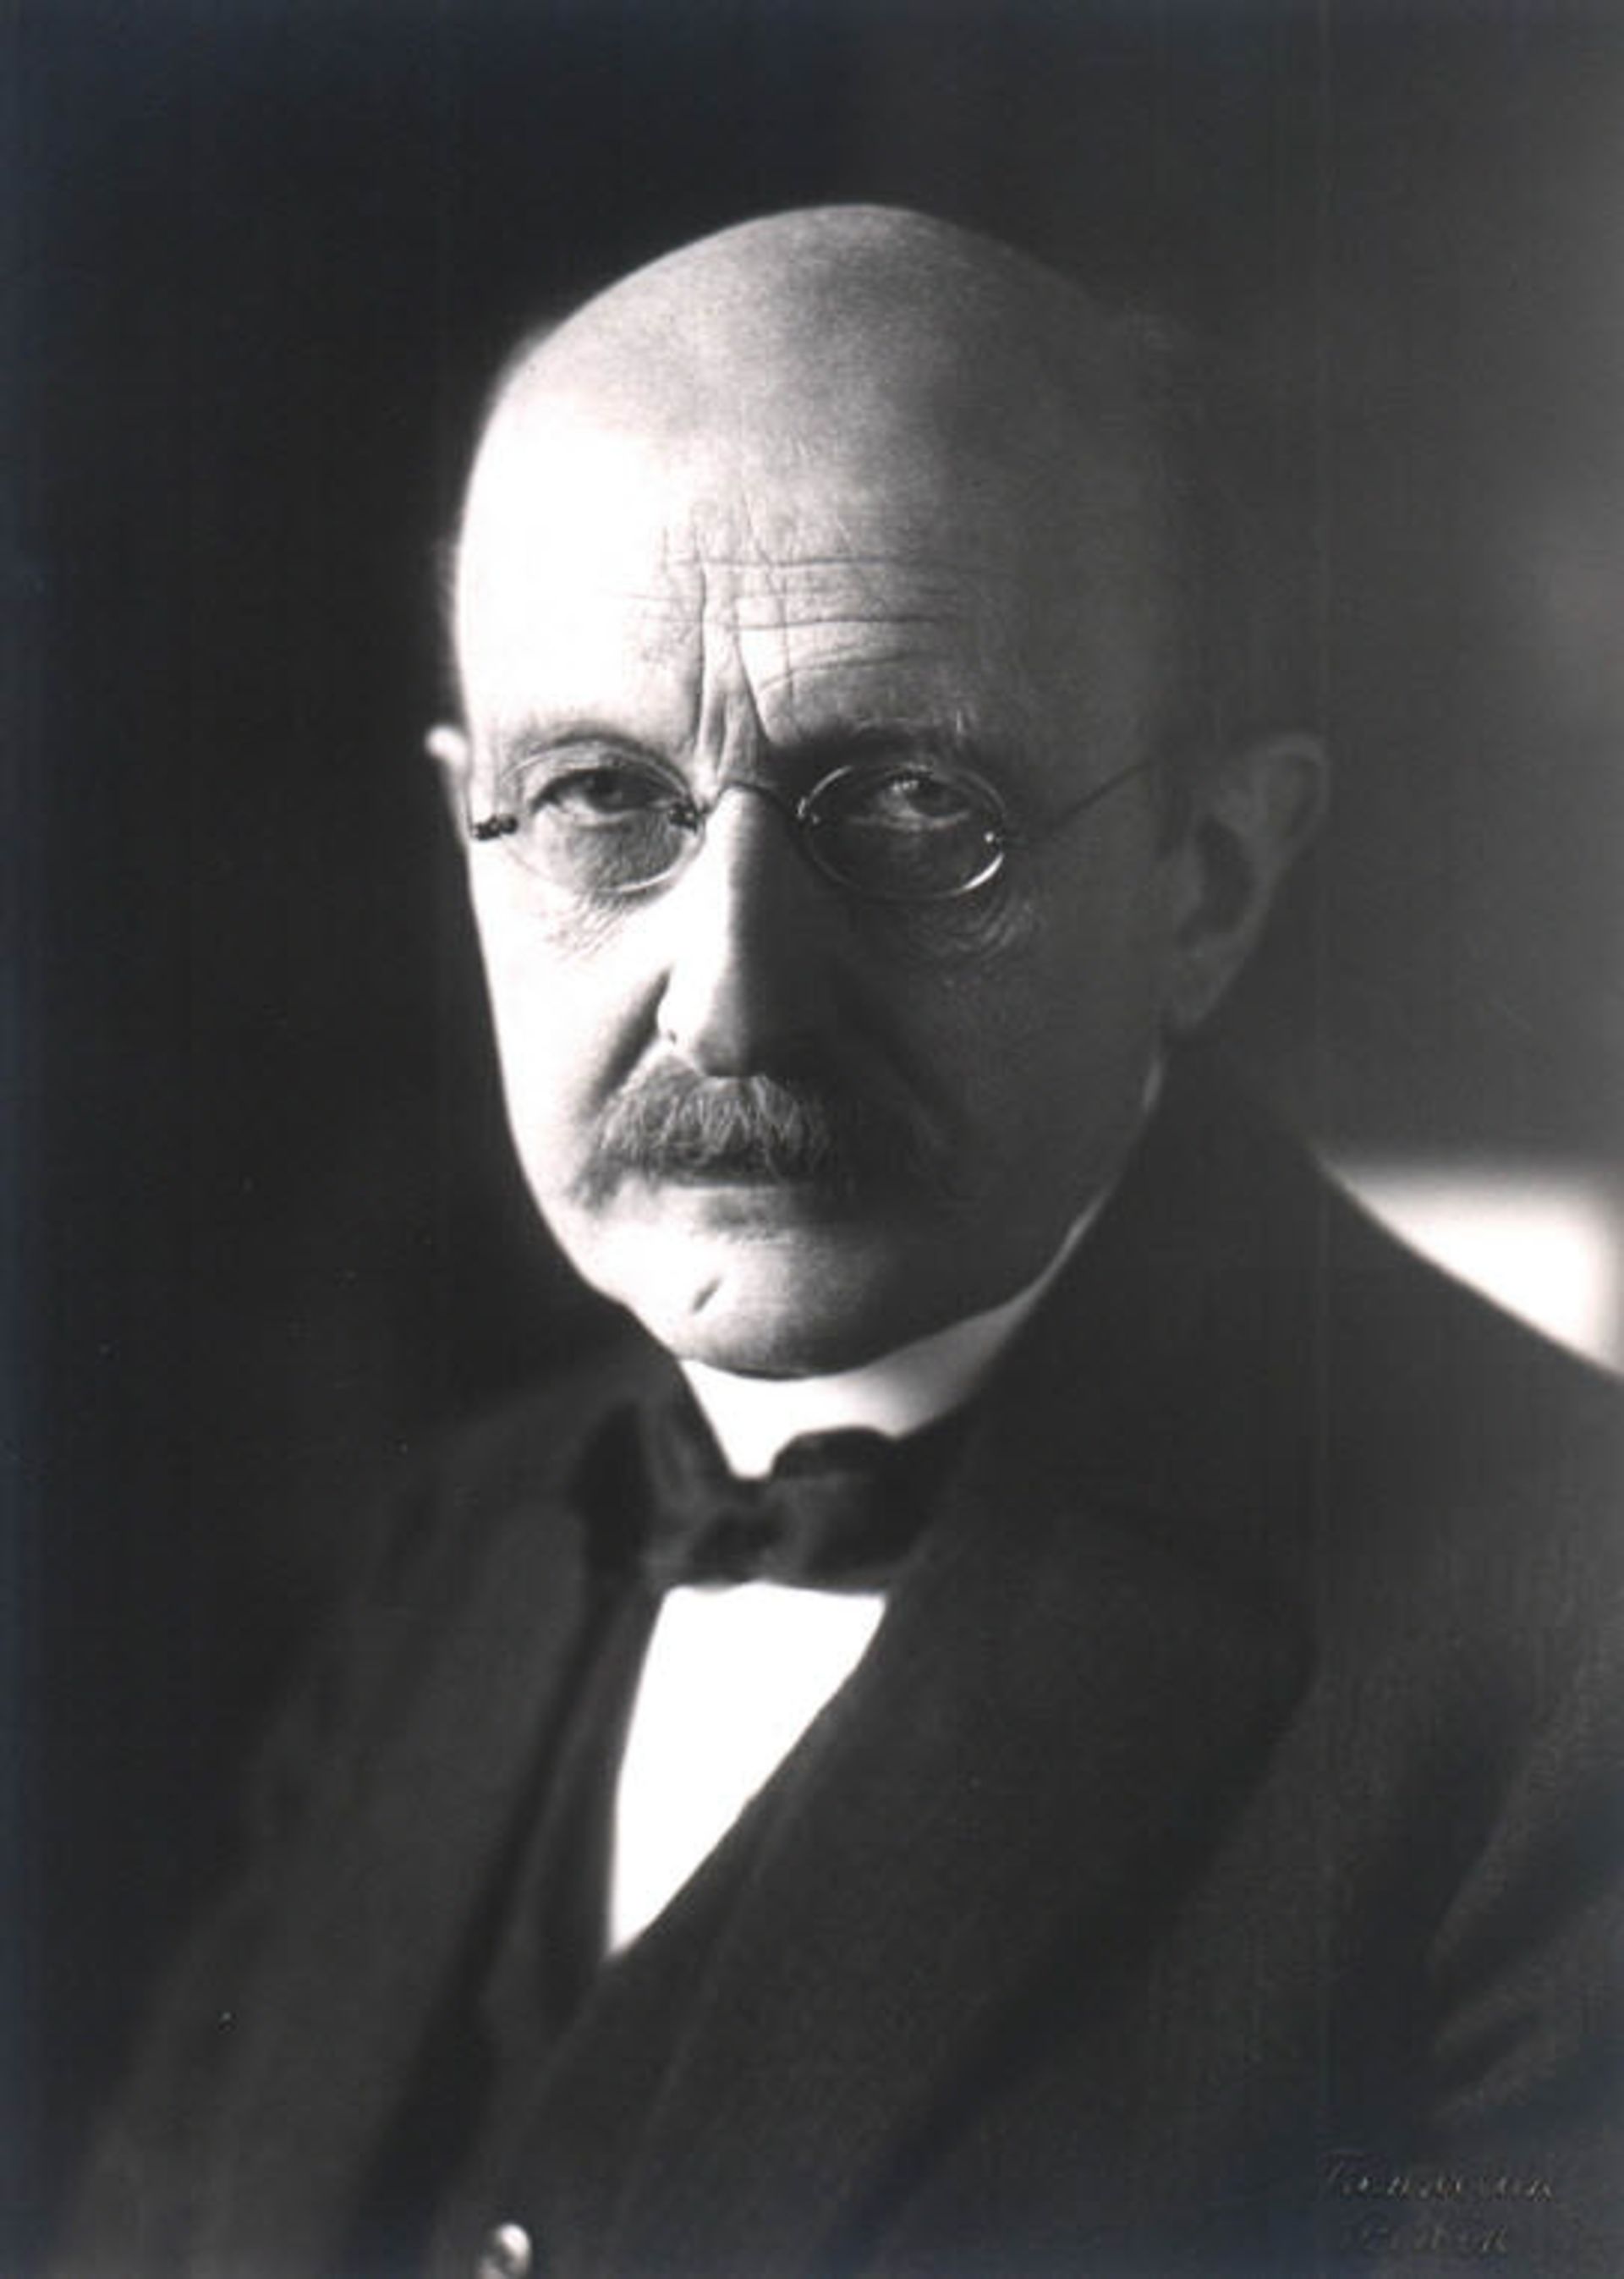 Max Planck 1858-1947